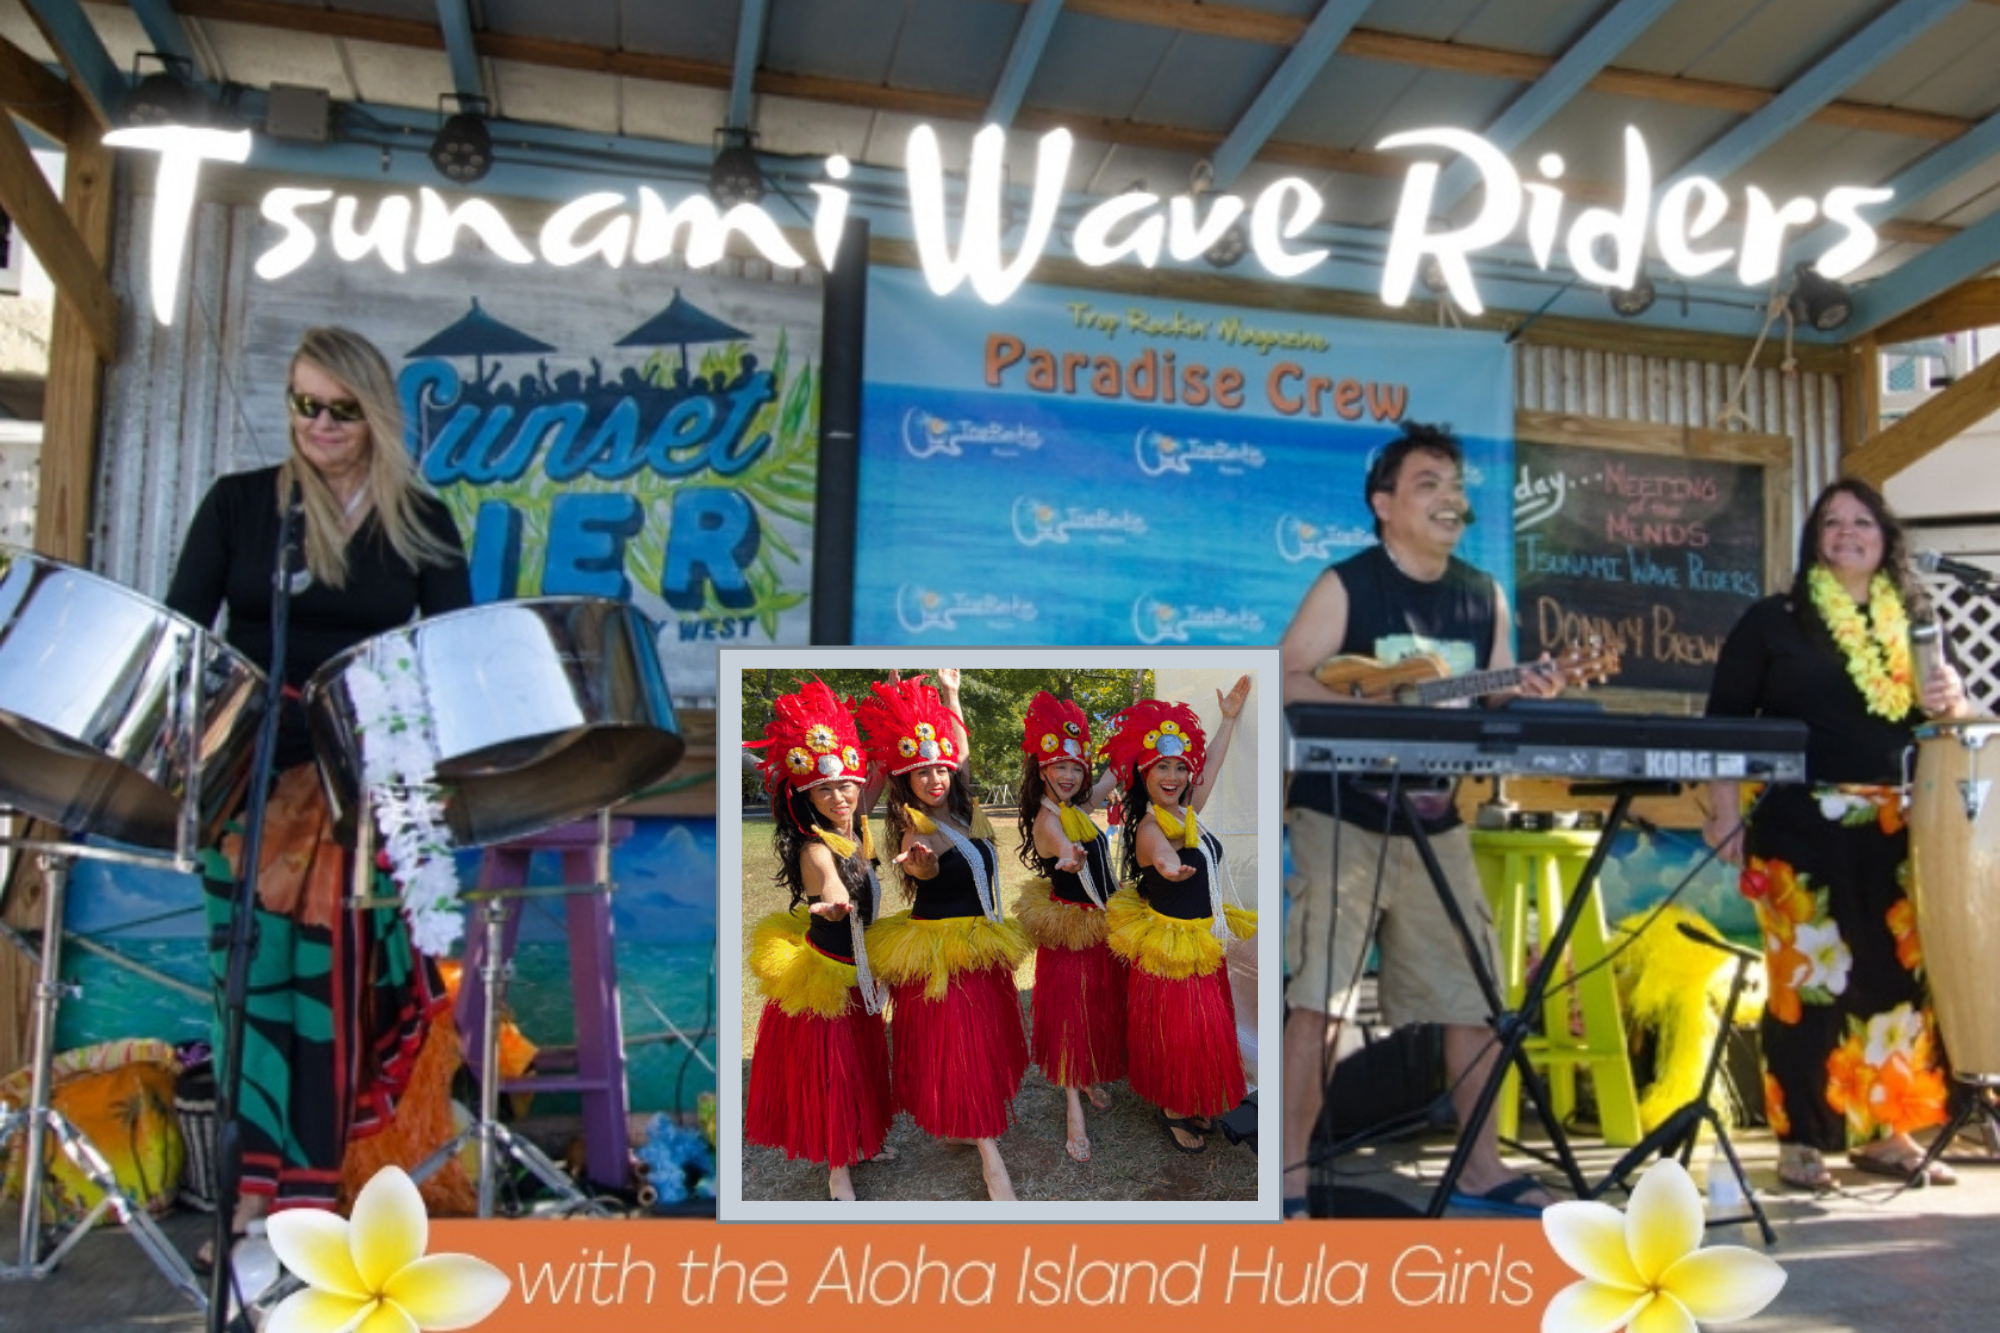 Tsunami Wave Riders promotional photo